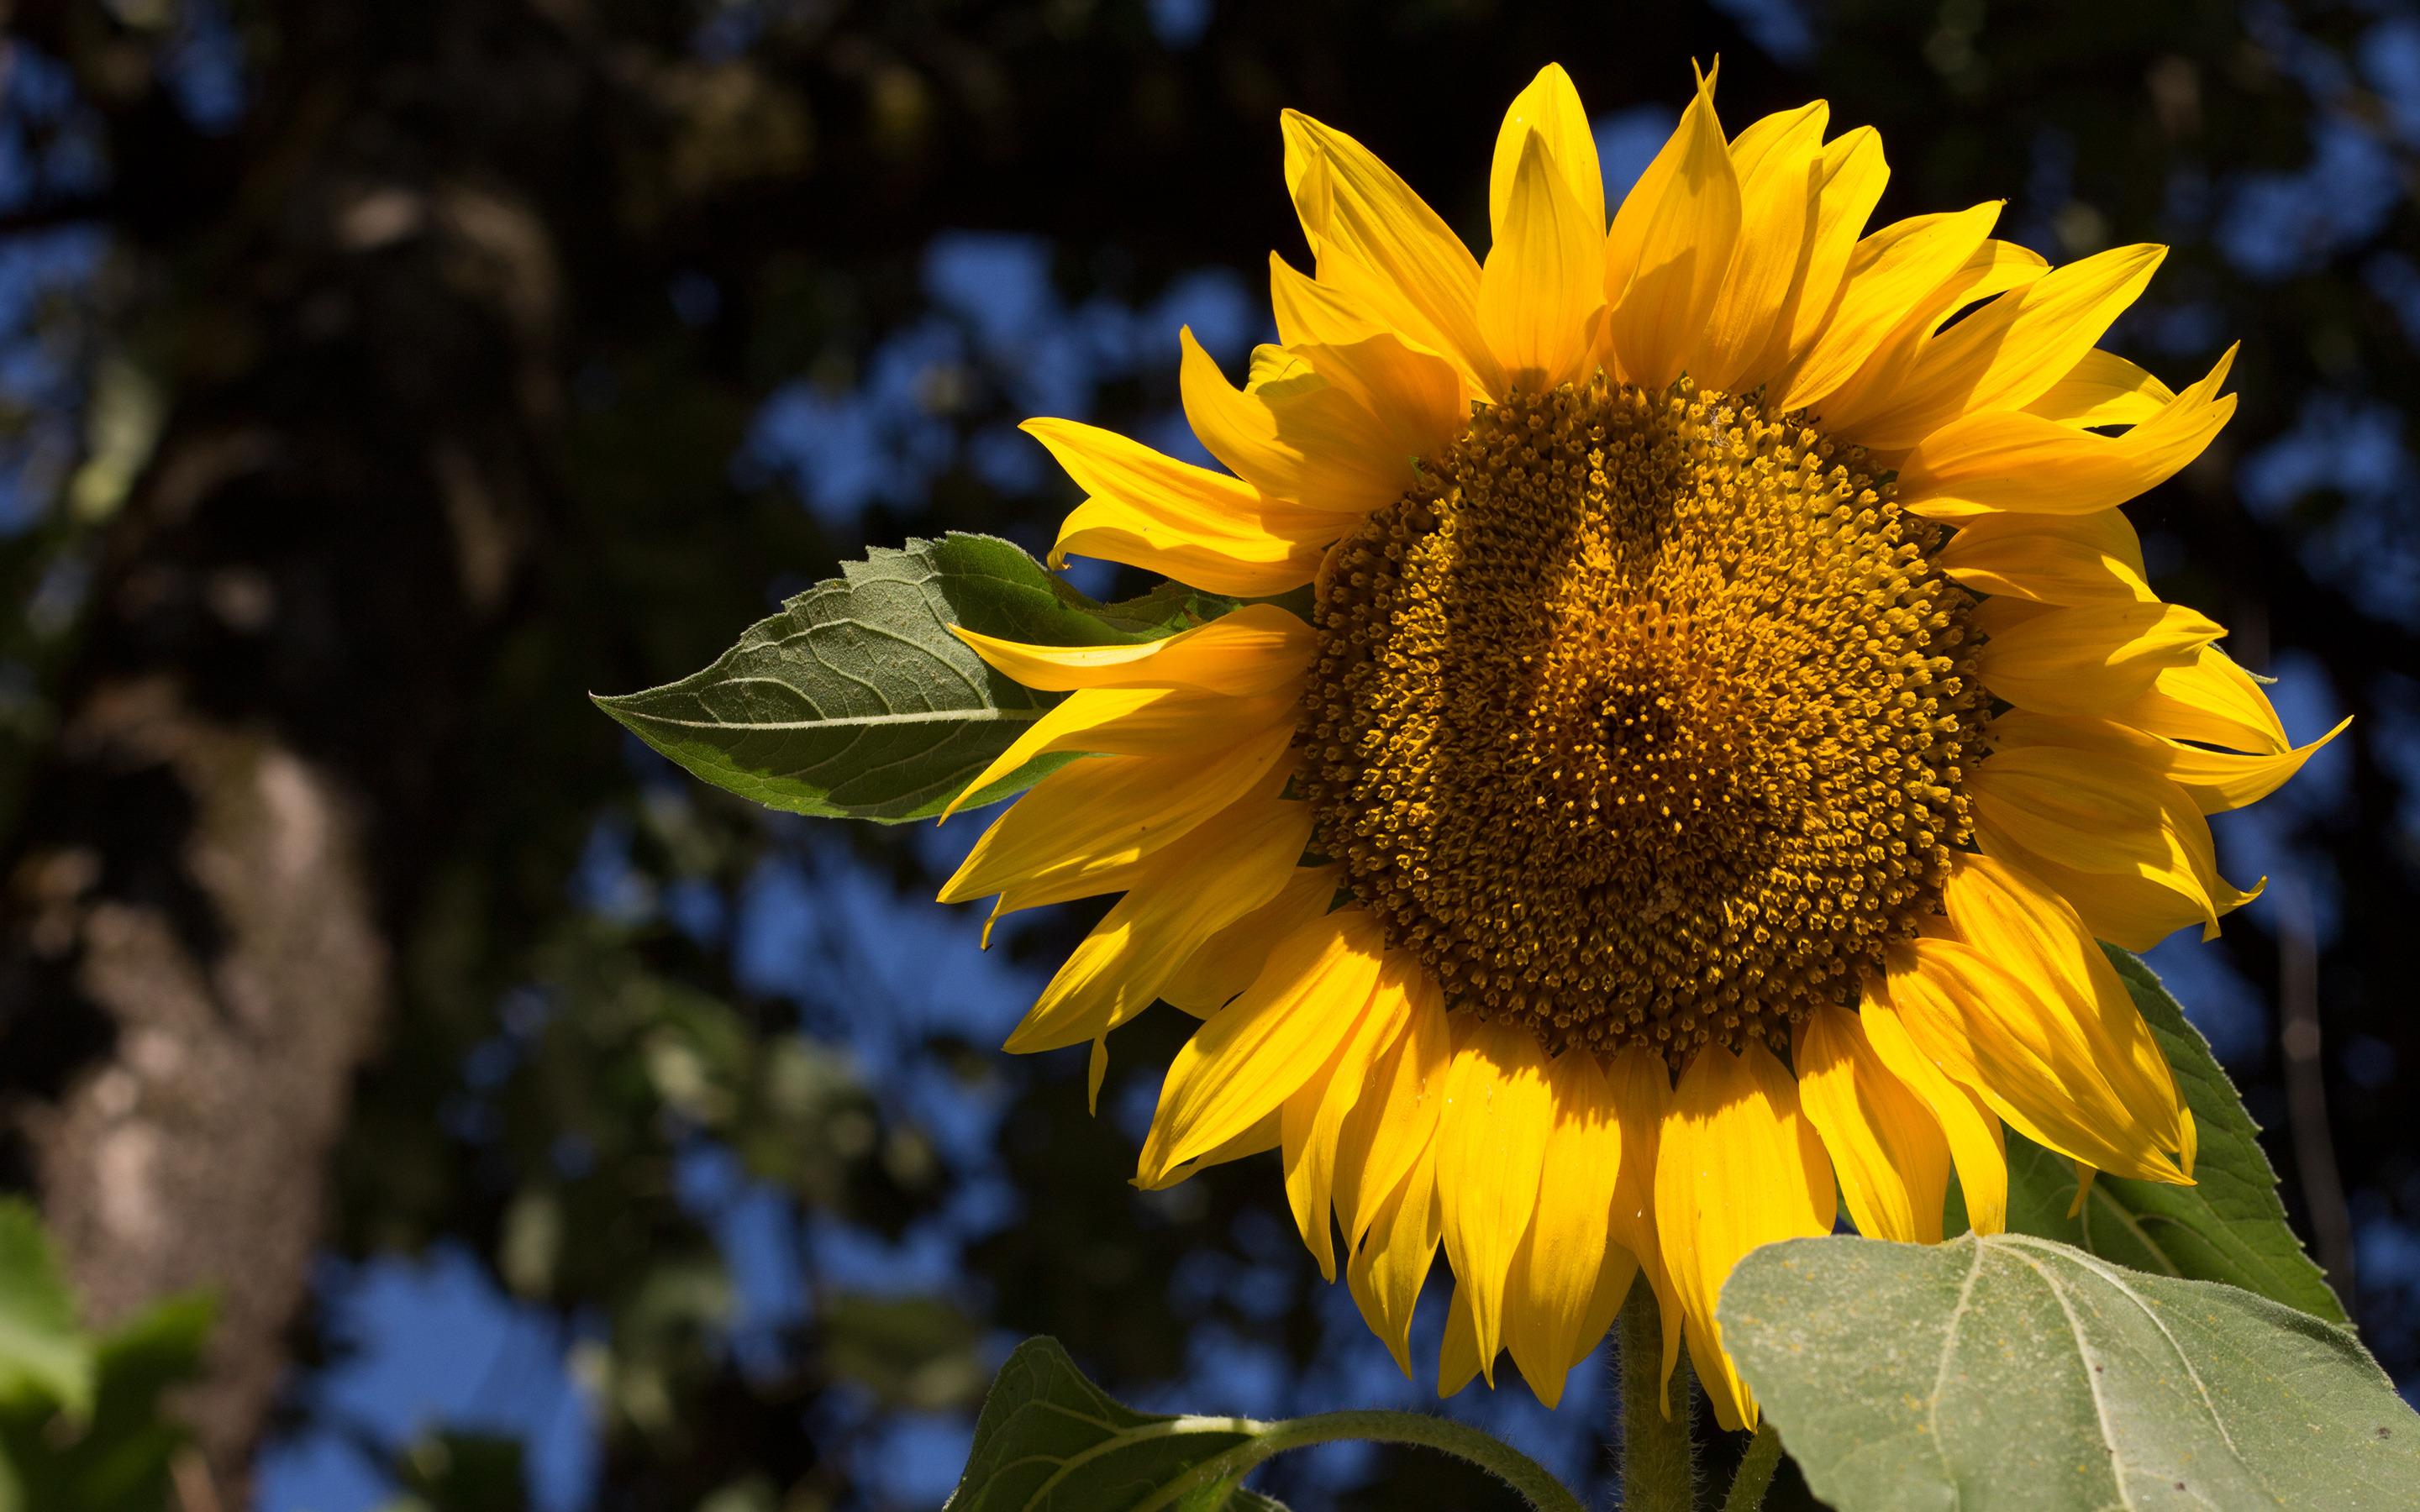 Hd Sunflower In The Afternoon Light Wallpaper - Gambar Hd Bunga Matahari - HD Wallpaper 